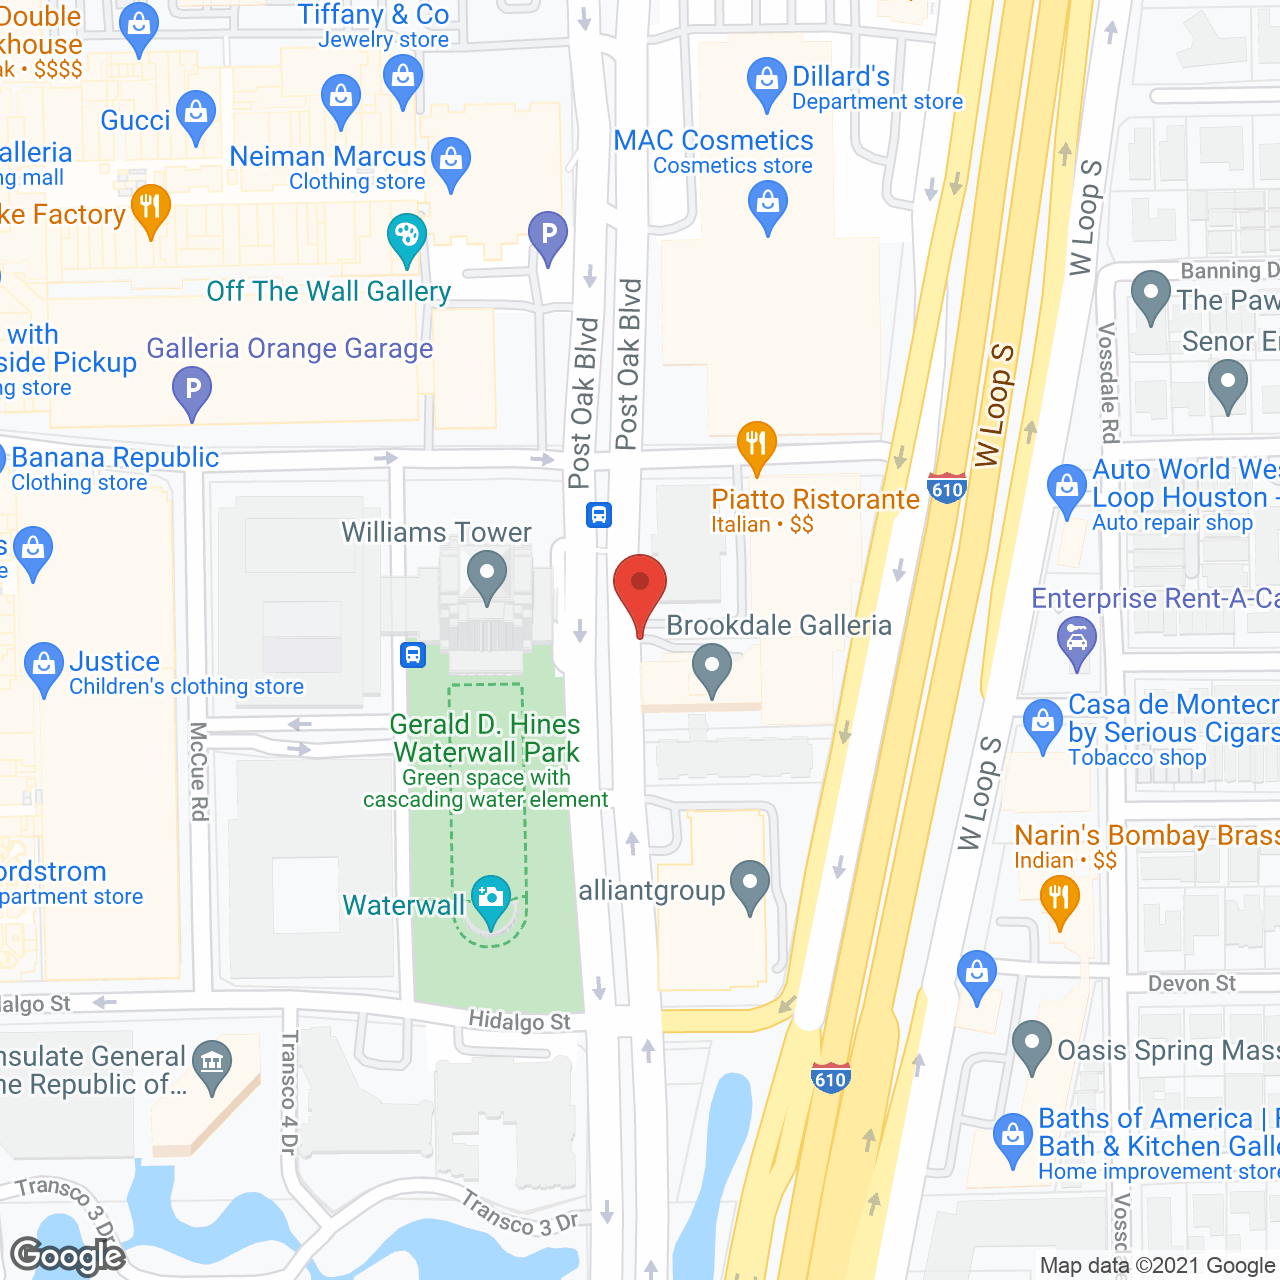 Brookdale Galleria in google map